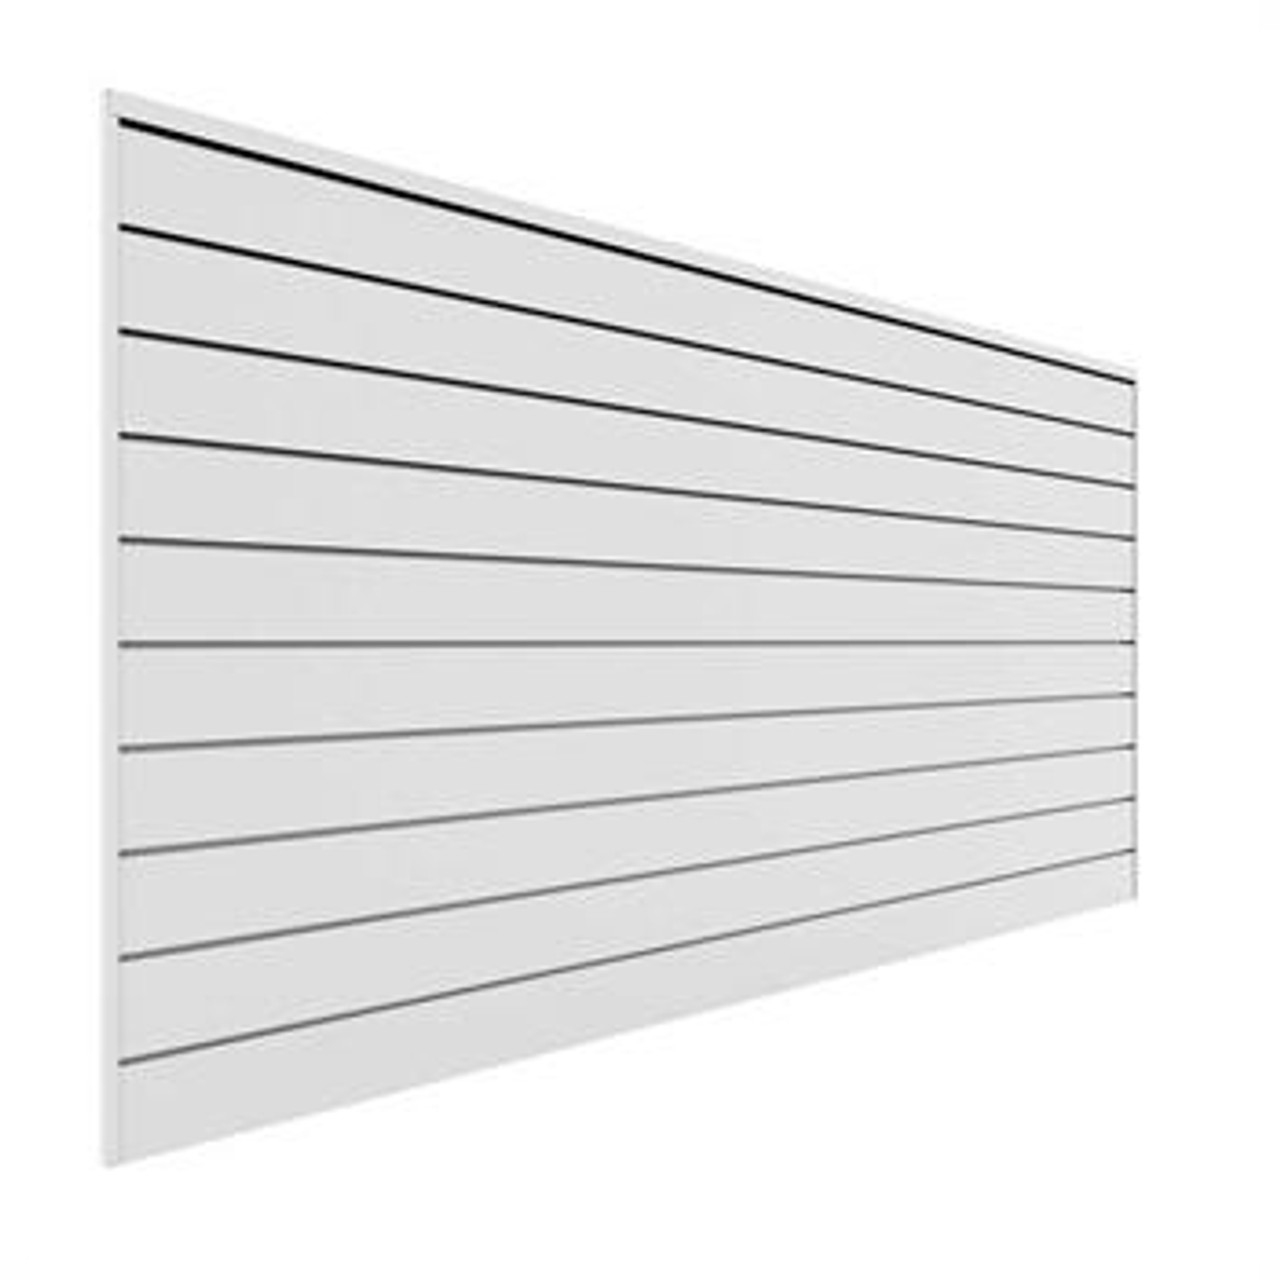 Proslat 8' x 4' PVC Wall Panels